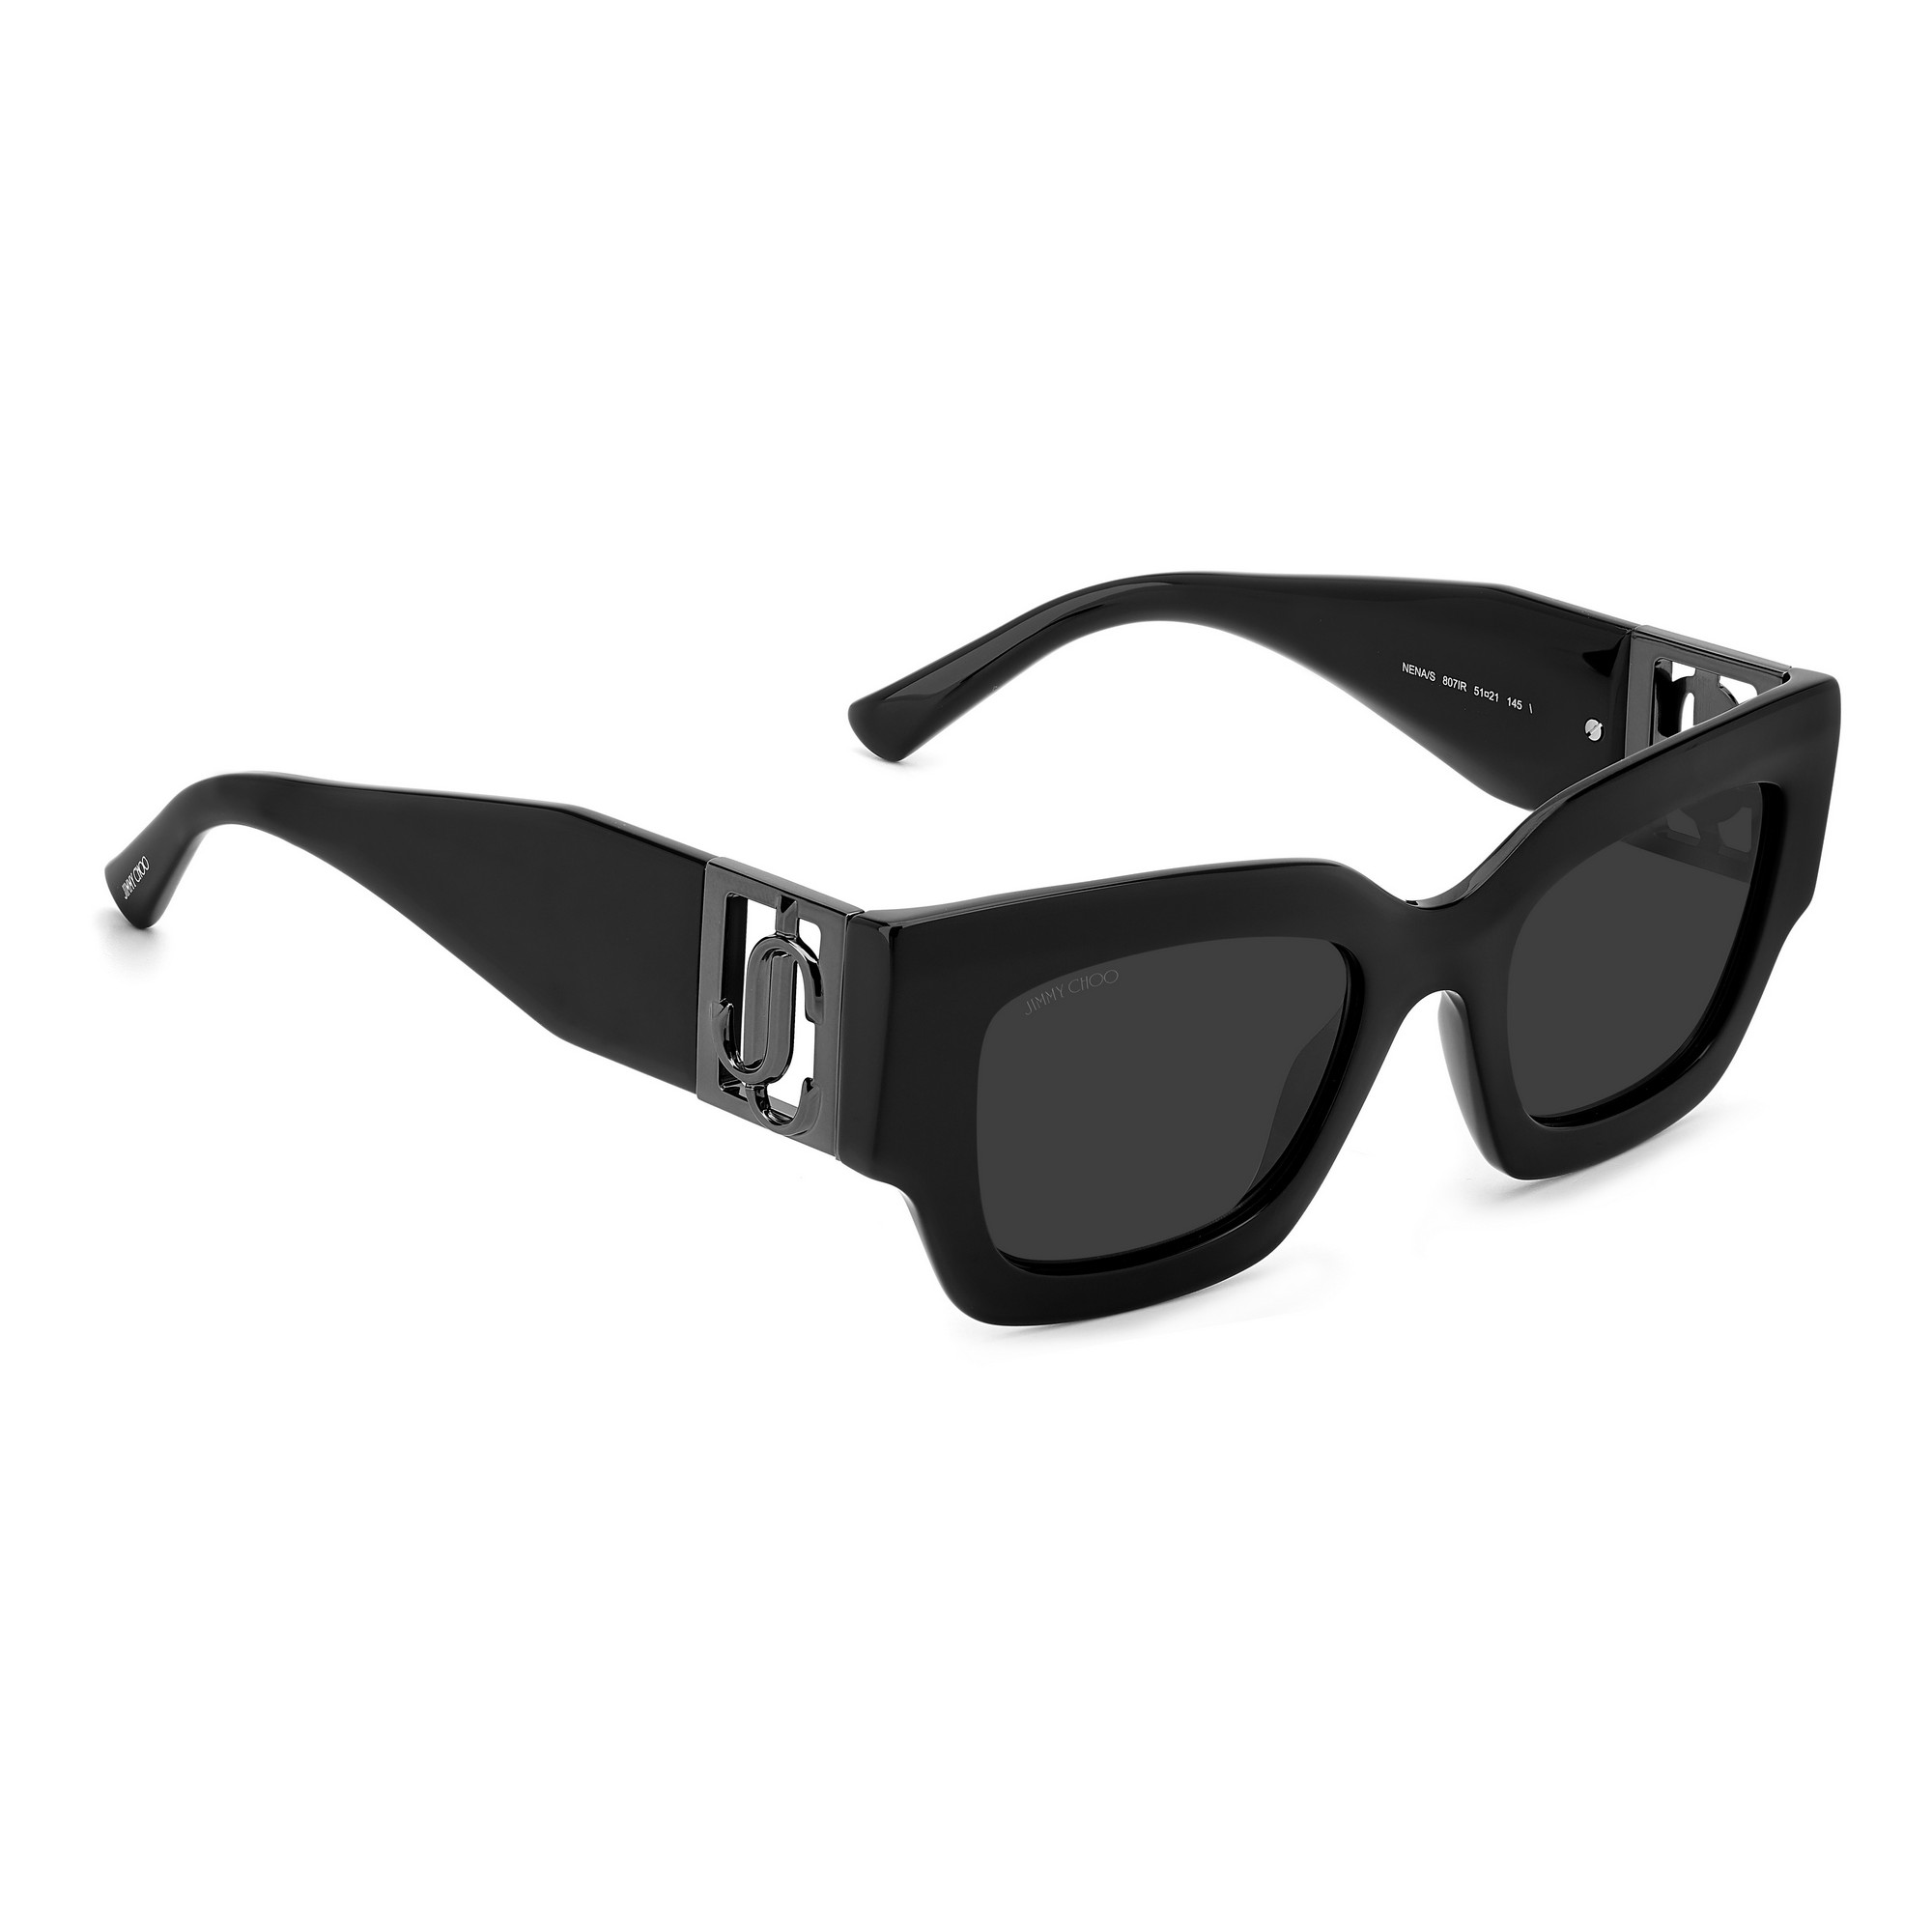 Jimmy Choo NENA/S - 807 IR Black | Sunglasses Woman